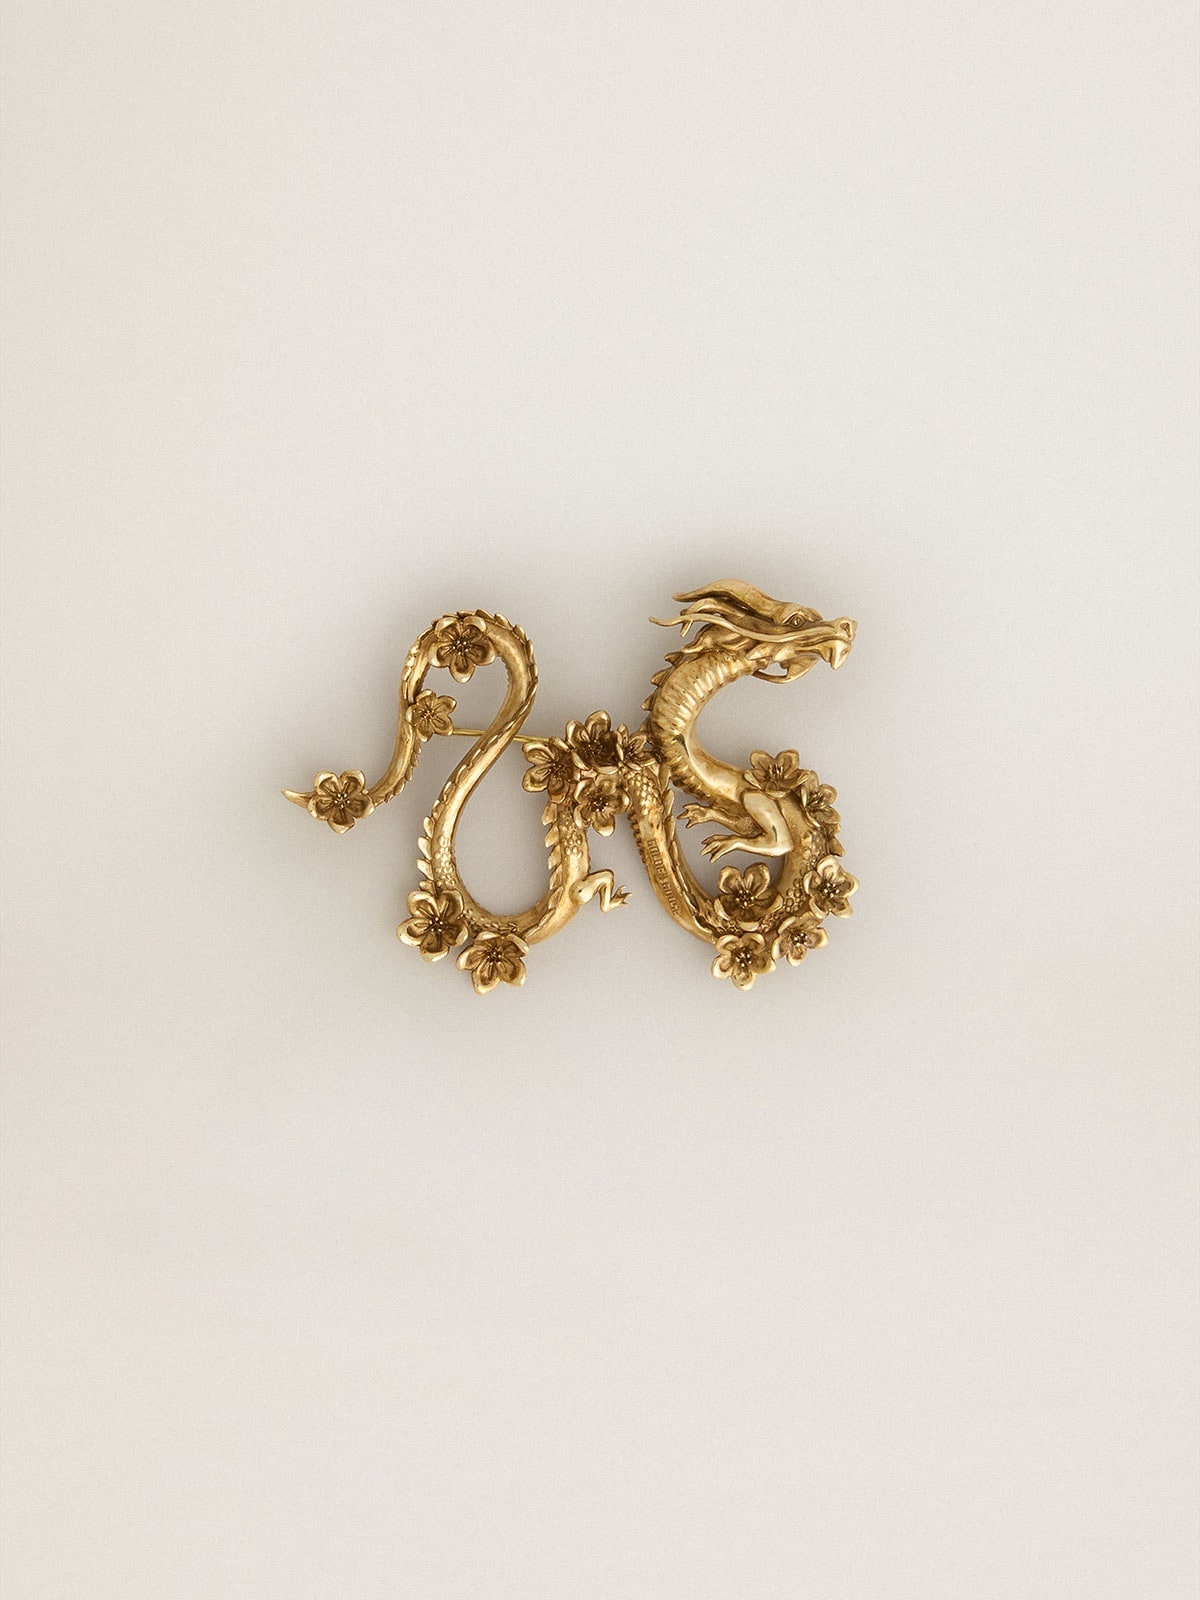 CNY antique gold dragon-shaped pin - 1